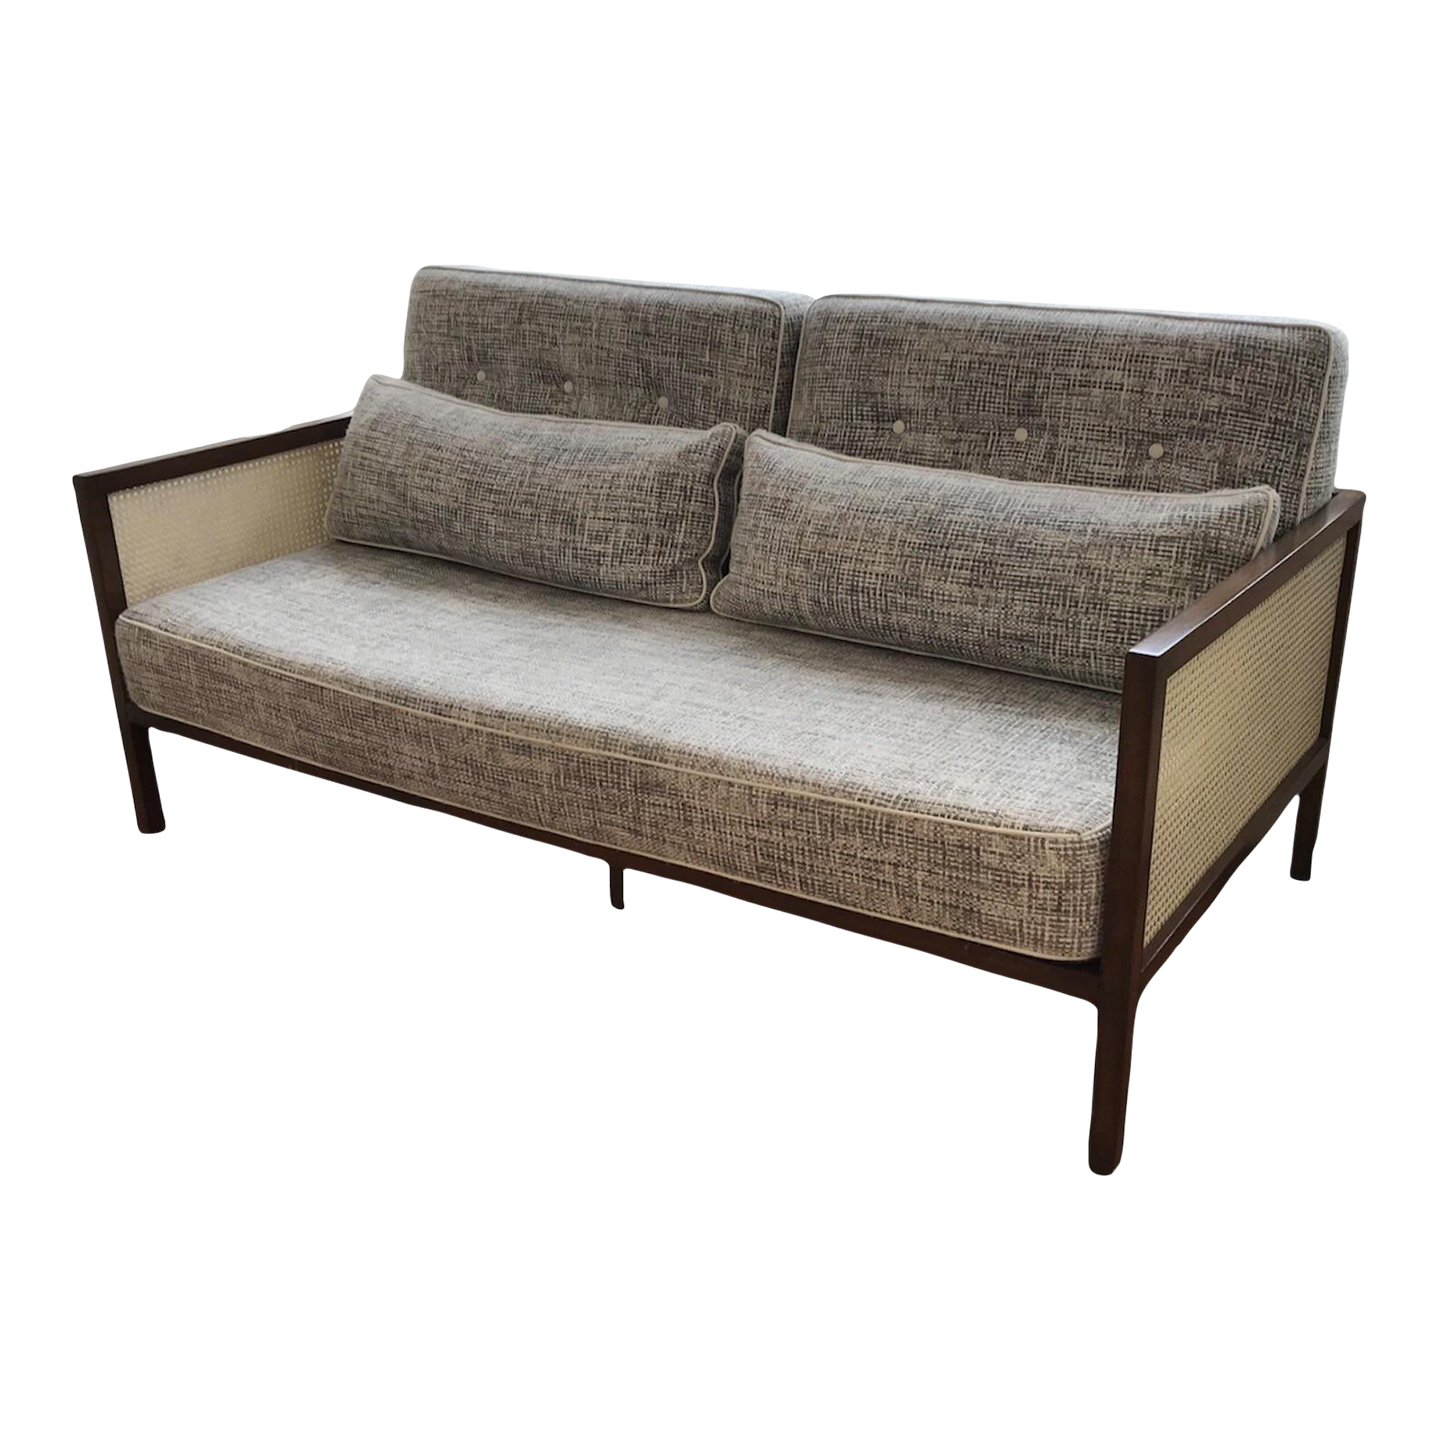 Custom Upholstered Daybed